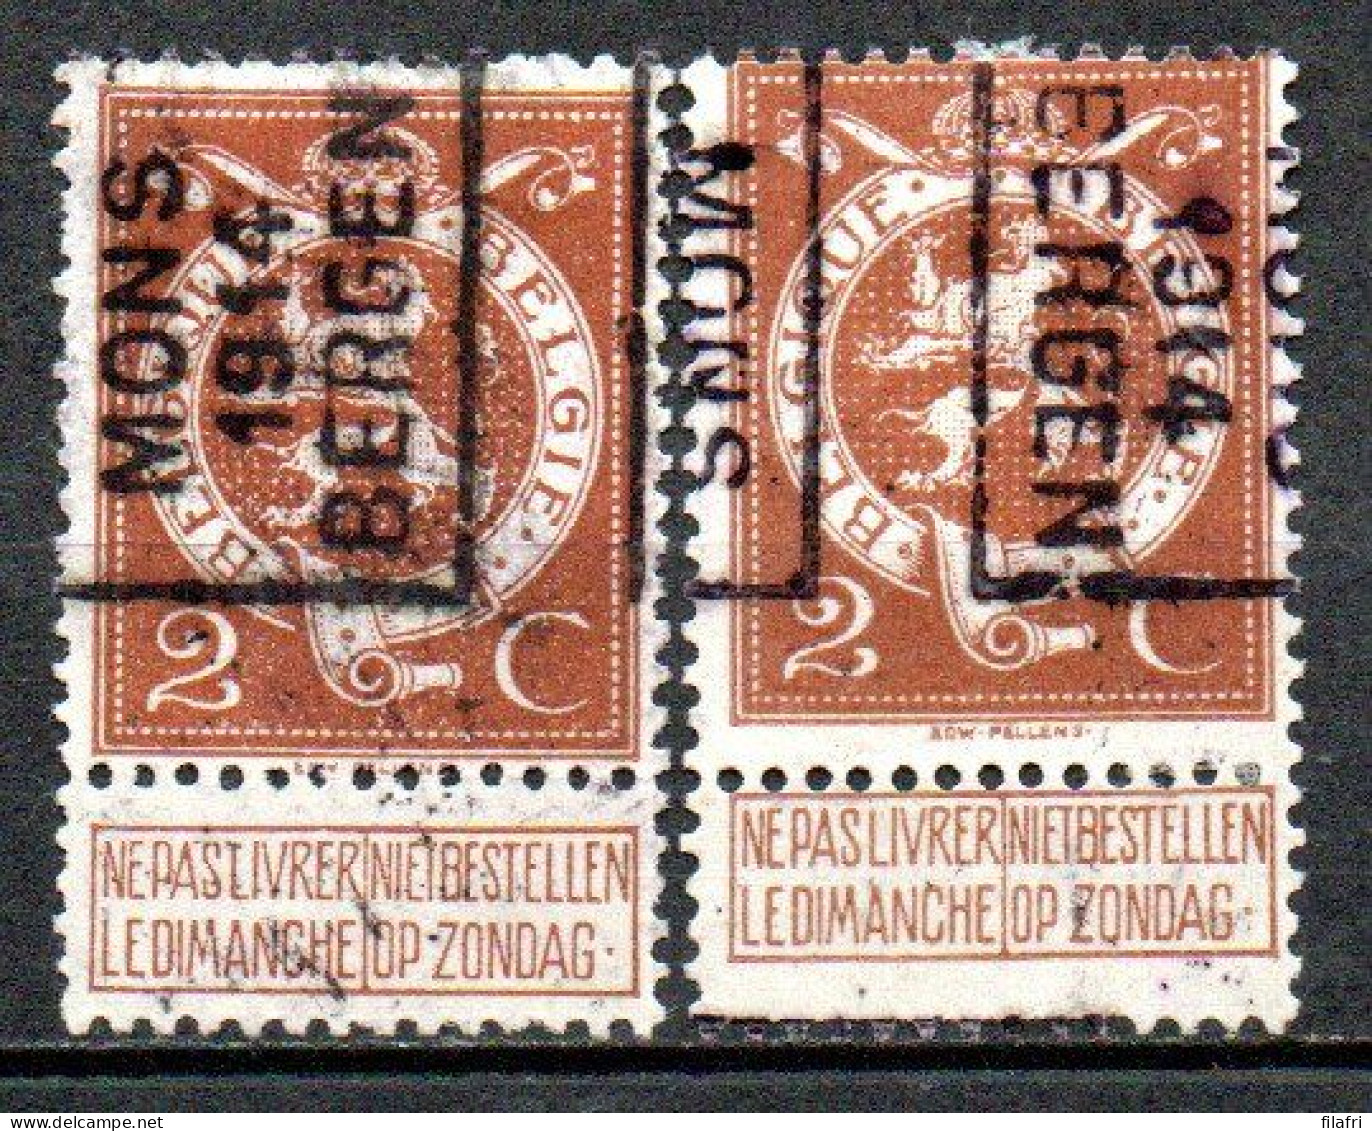 2367 Voorafstempeling Op Nr 109 - MONS 1914 BERGEN - Positie A & B - Rolstempels 1910-19